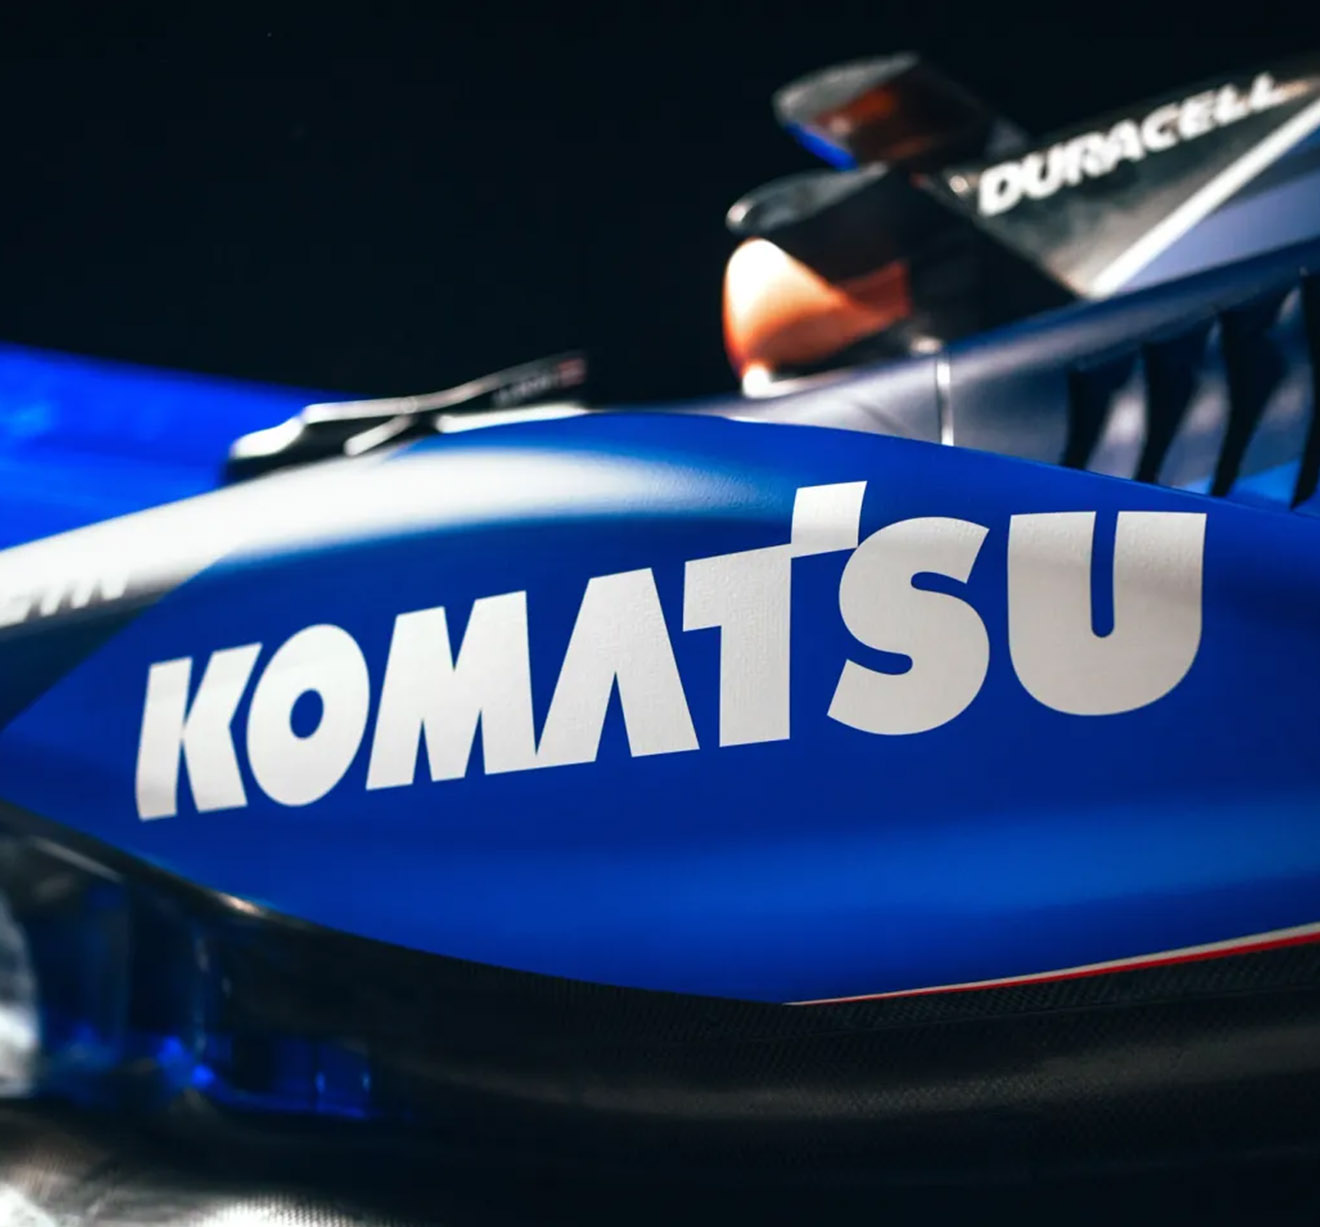  Komatsu e Williams Racing ricostituiscono la loro storica partnership